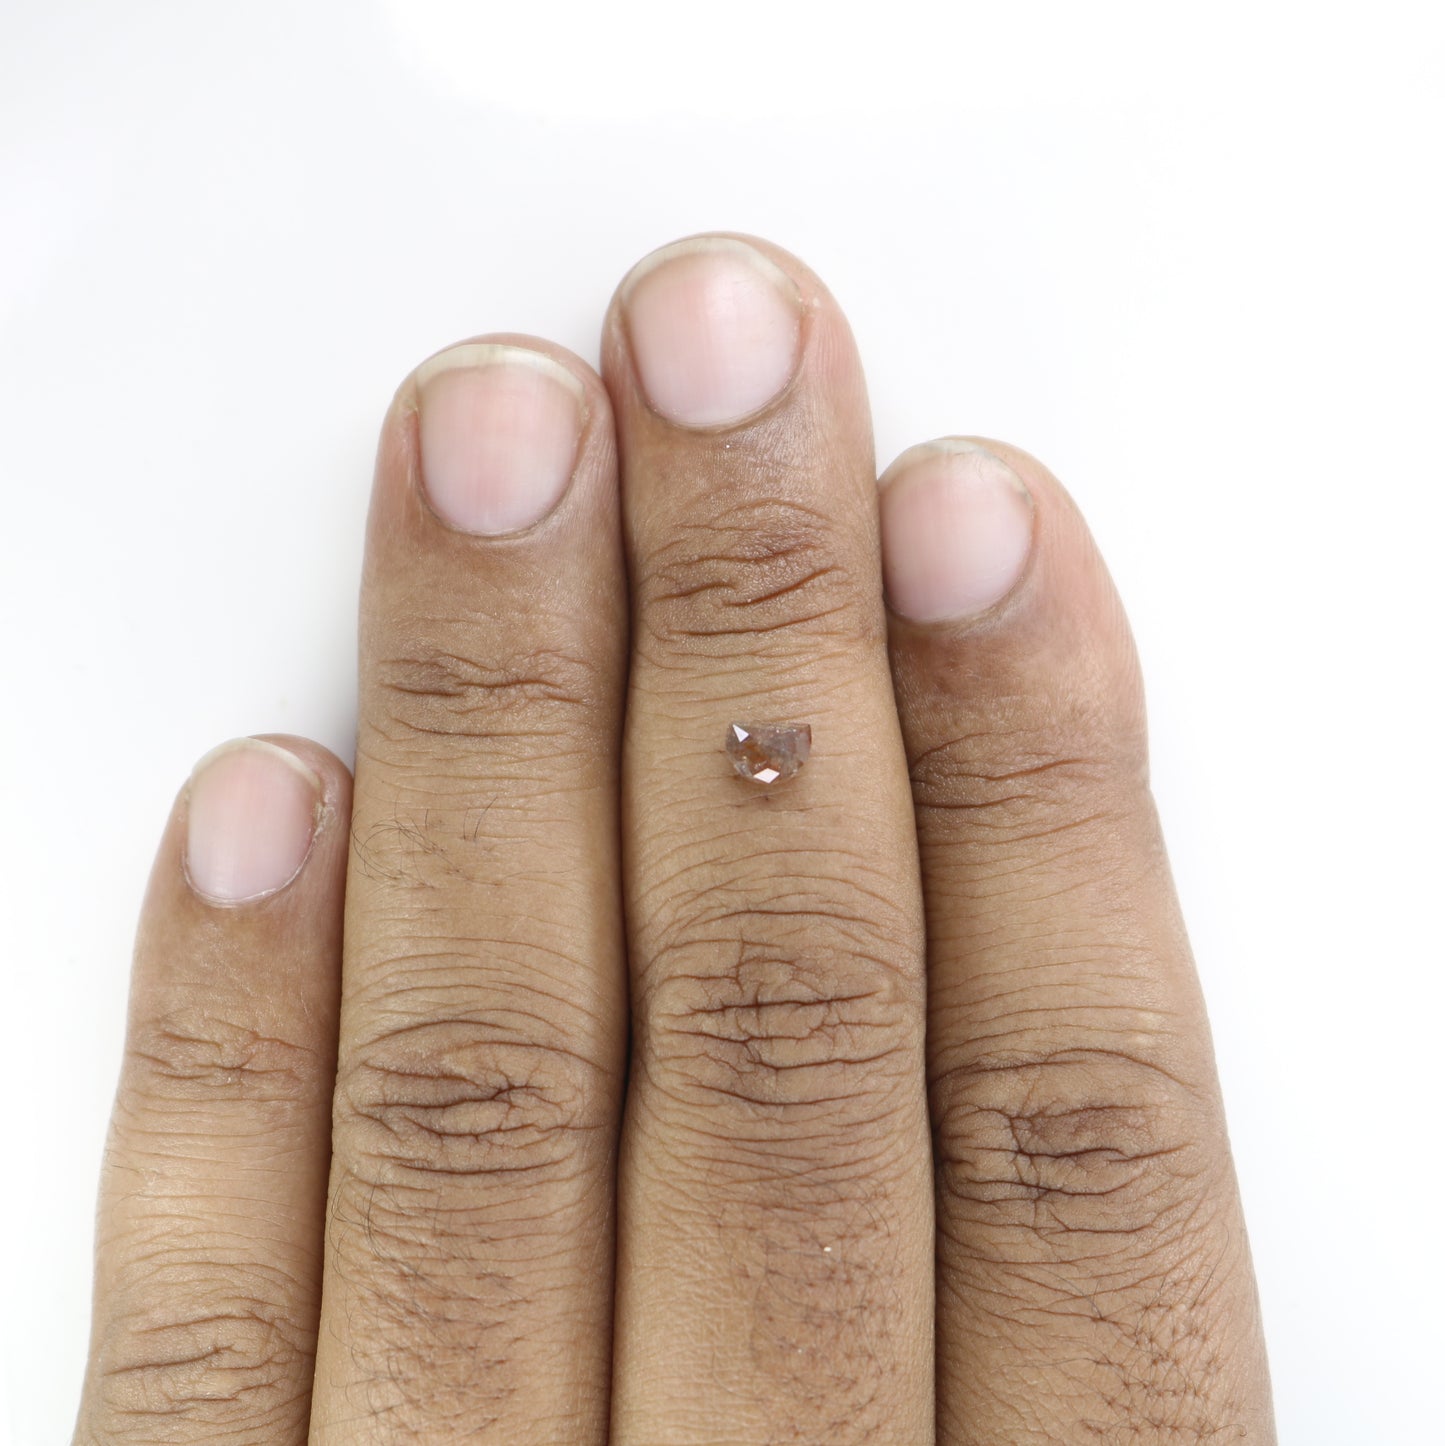 0.61 CT Half Moon Red Colour Diamond For Engagement Necklace | Customize Handmade Half Moon Diamond Ring